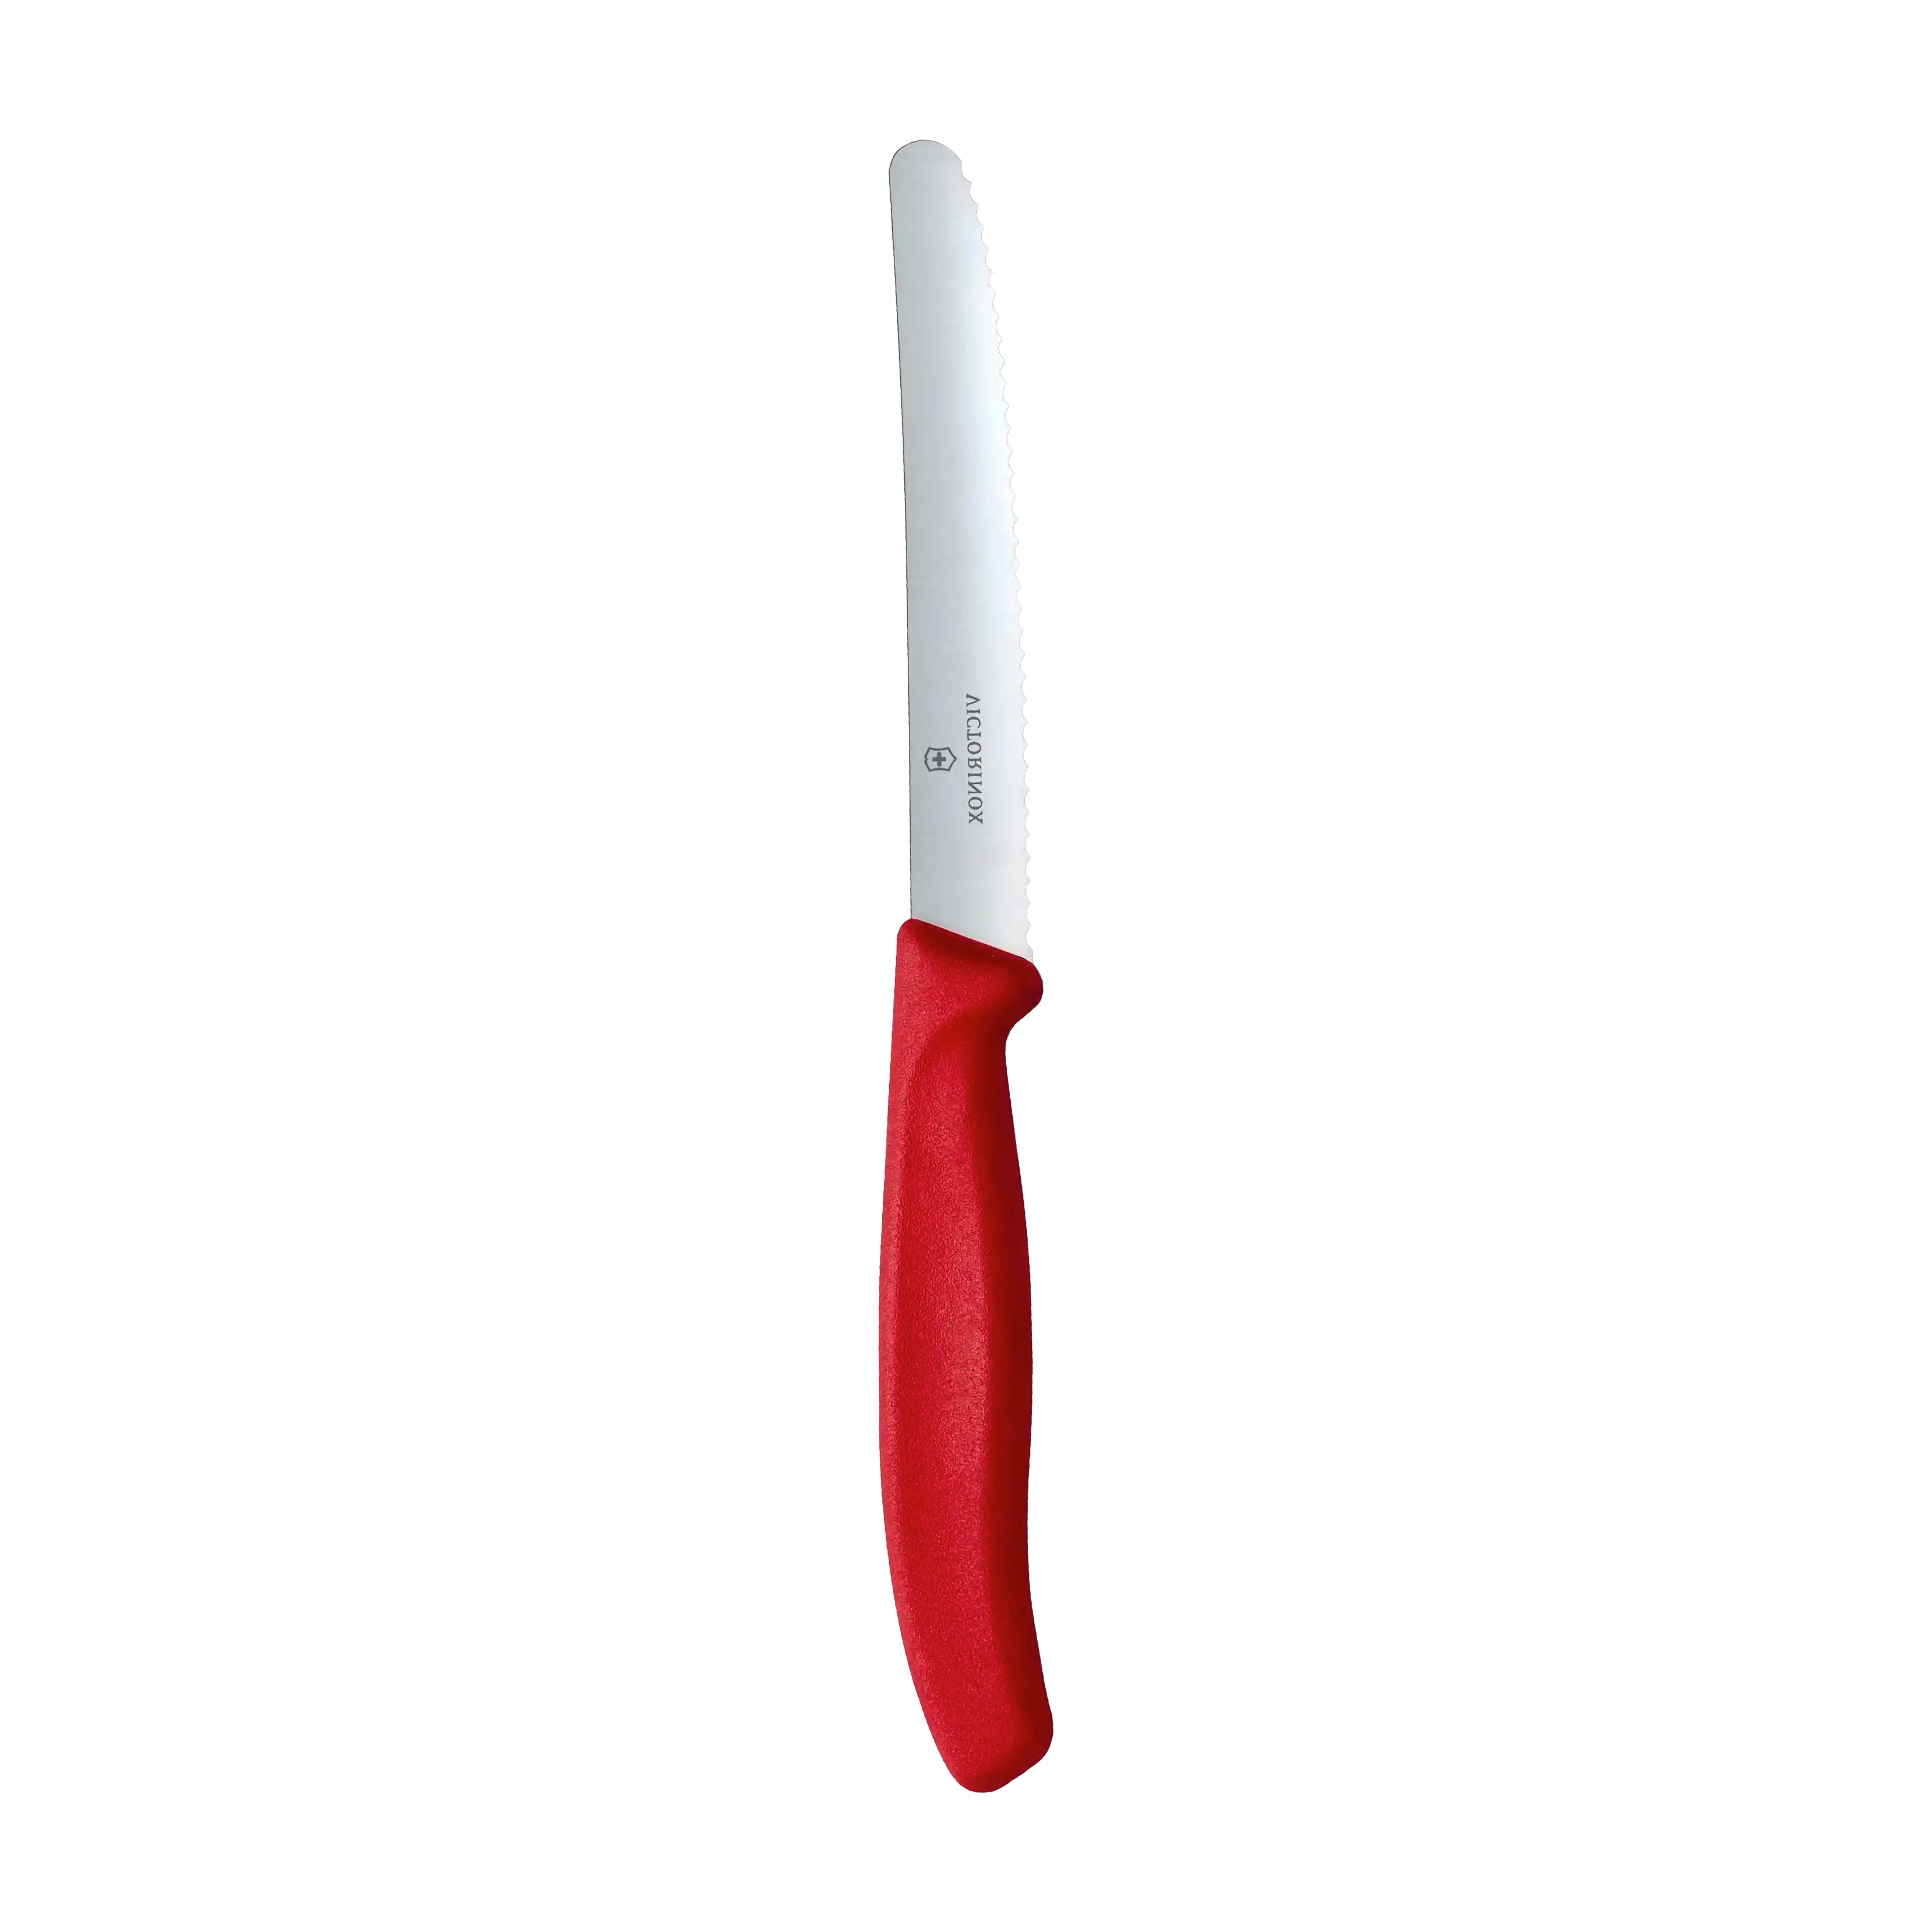 Cuchillo para Verdura Puntiagudo 10 Cm Victorinox® Rojo